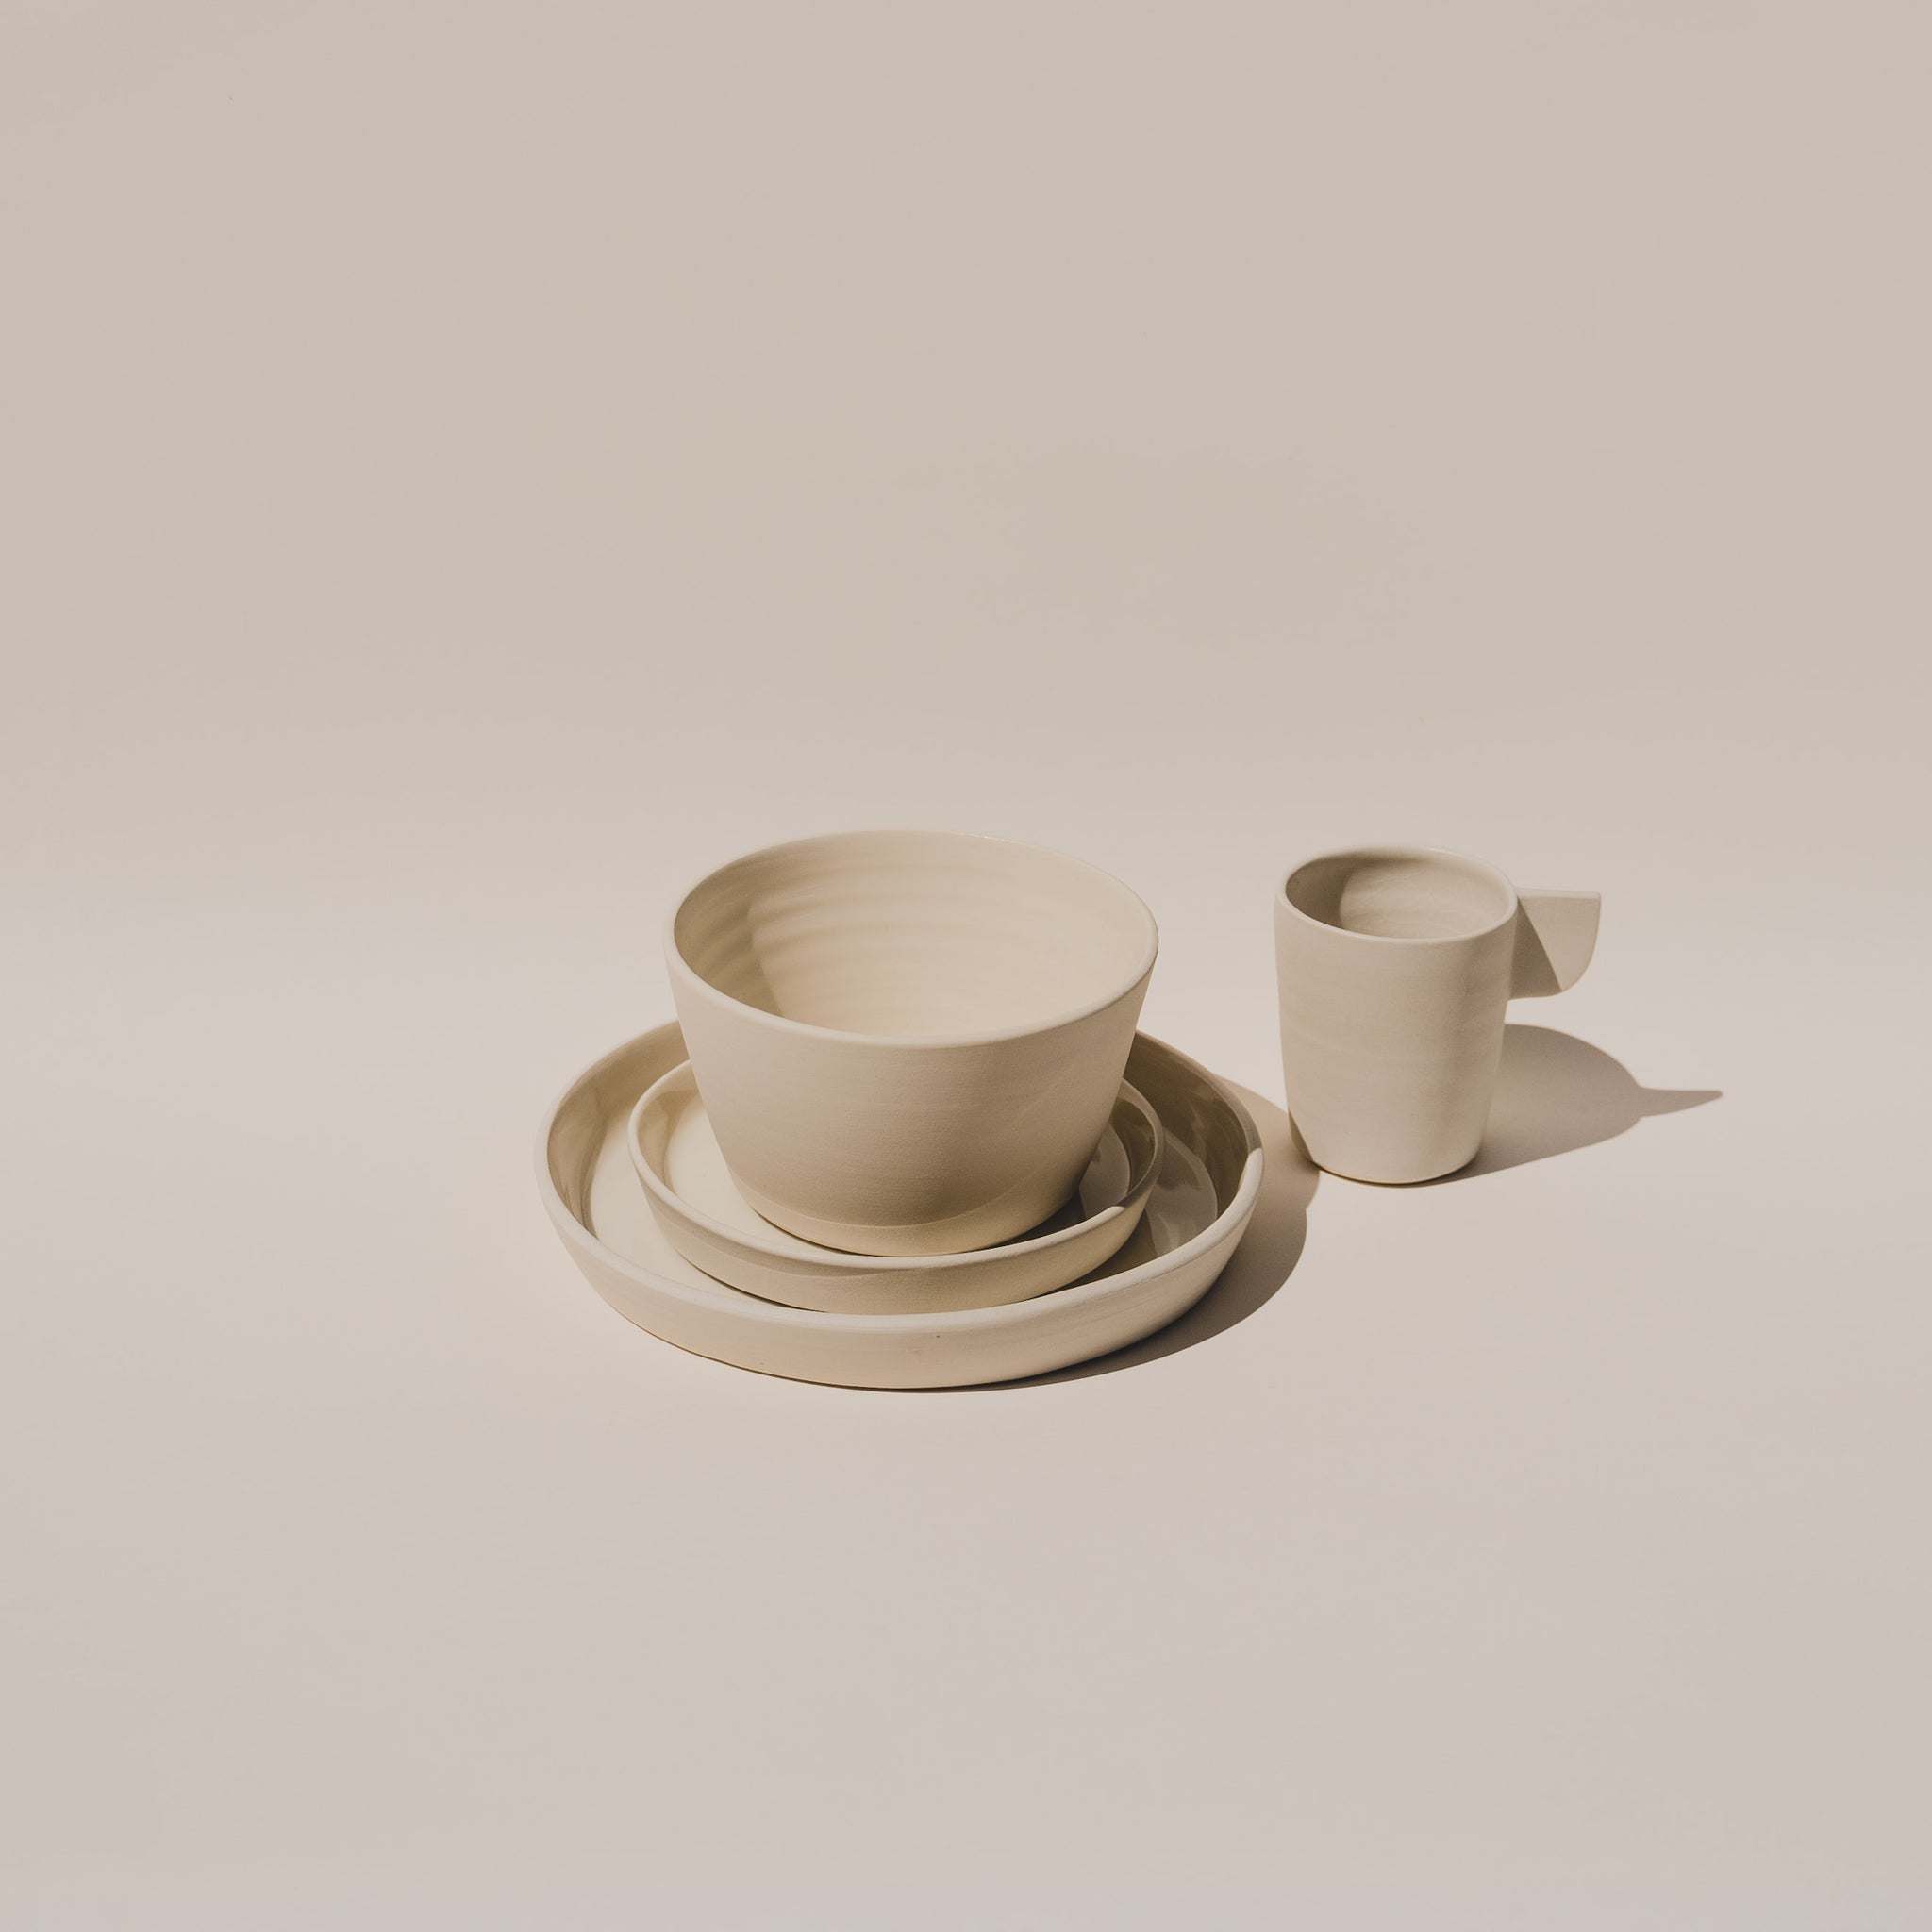 Ceramic Plate and Ceramic Dinner Set in white colour